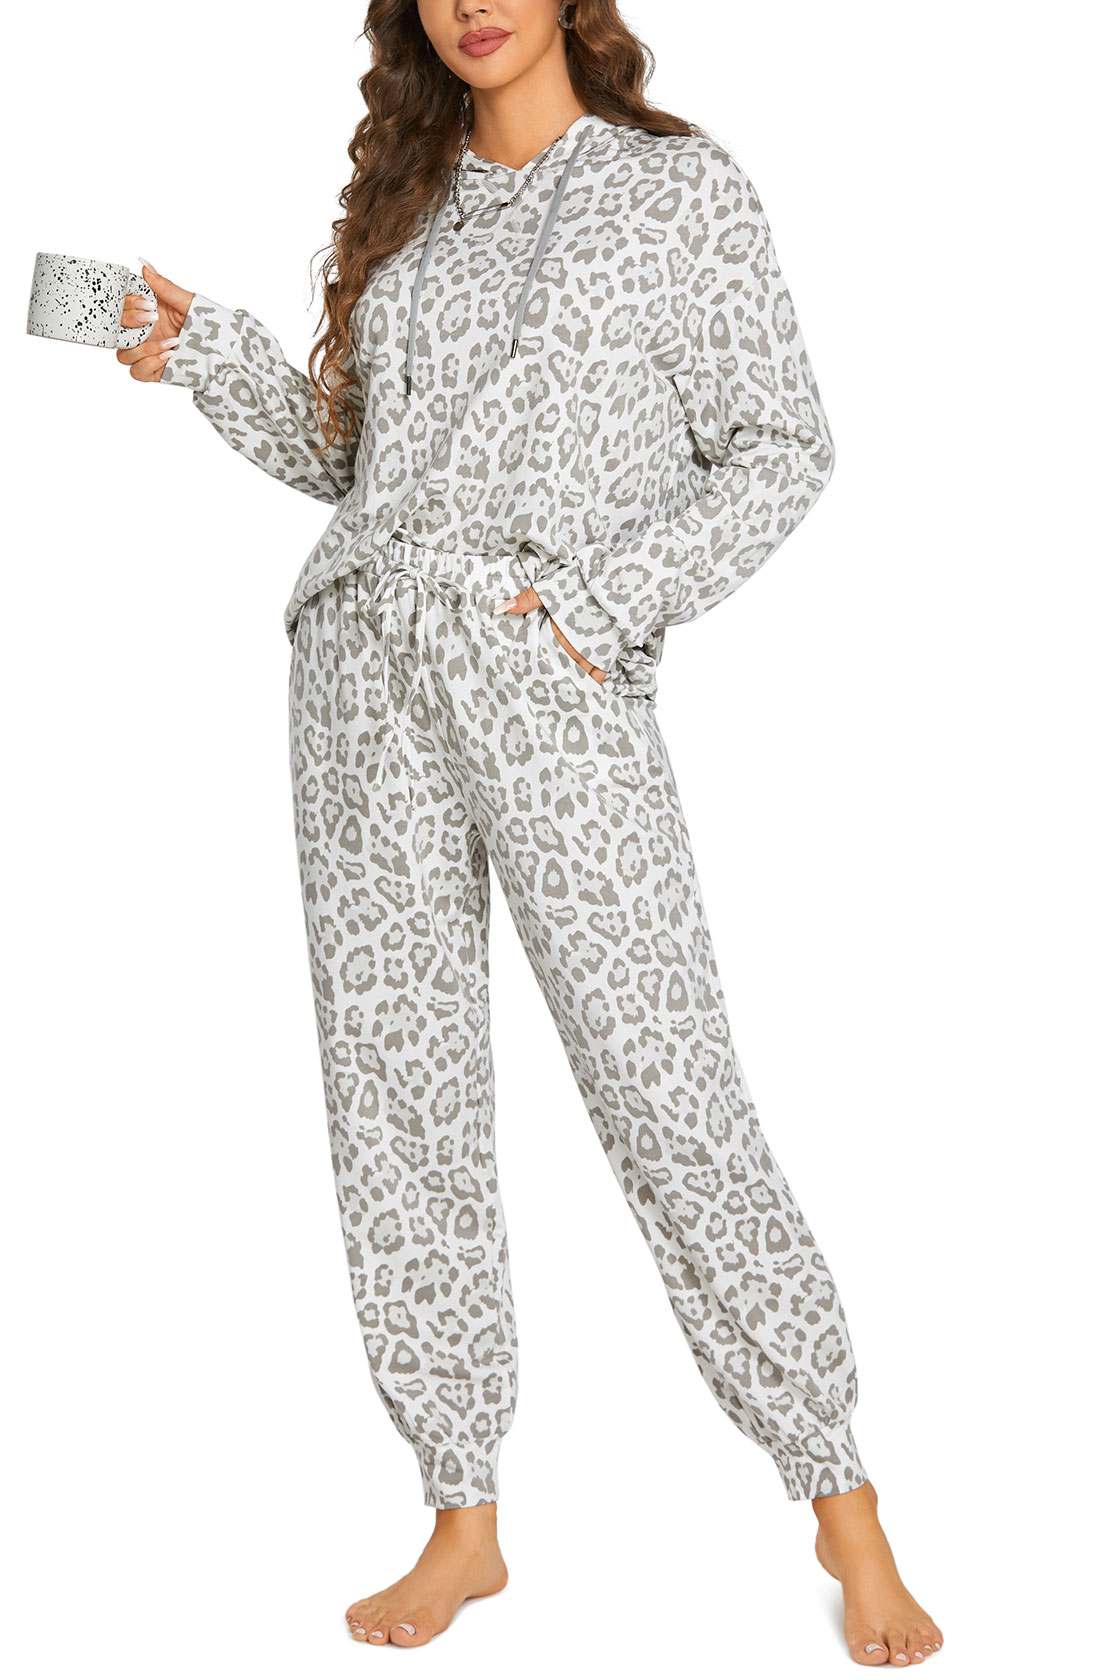 DOBREVA Women's Pajama Sets Long Sleeve Hoodie Two Piece Sleepwear  Loungewear